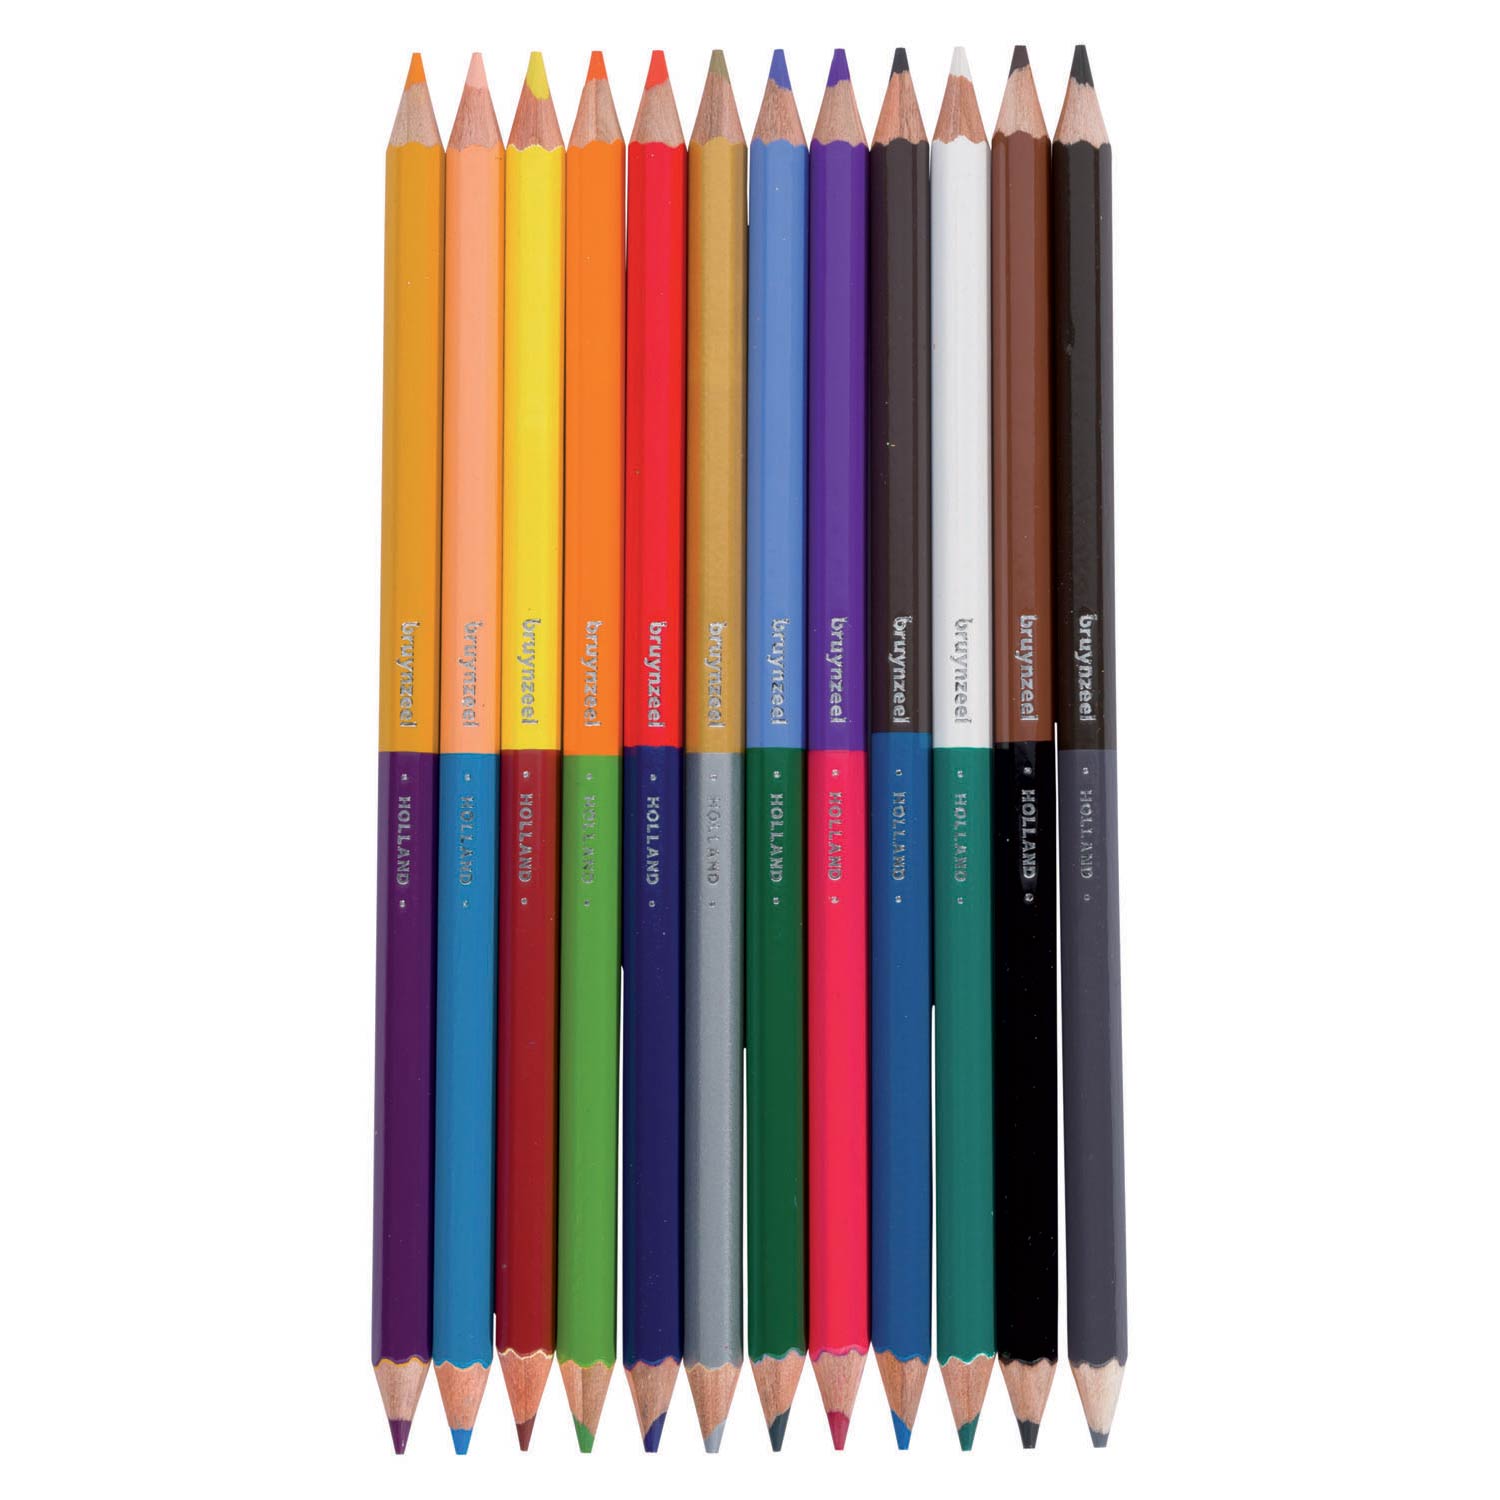 Crayons de couleur Bruynzeel Kids Twin Point, 12 pcs.